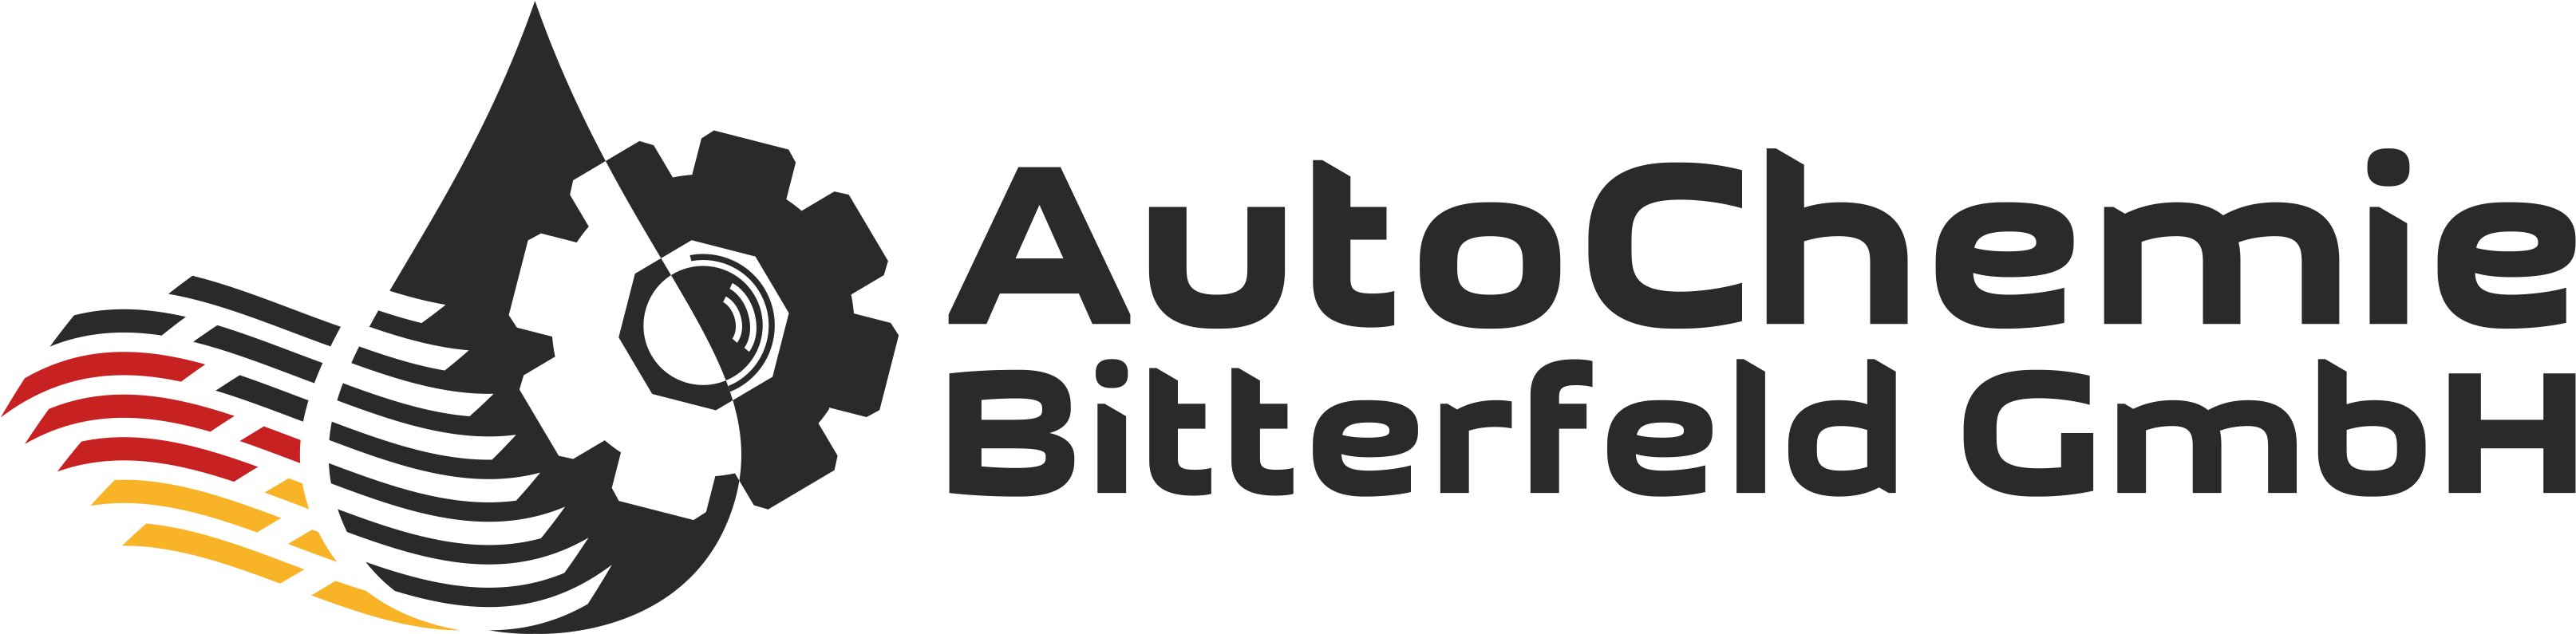 Autochemie Bitterfeld GmbH